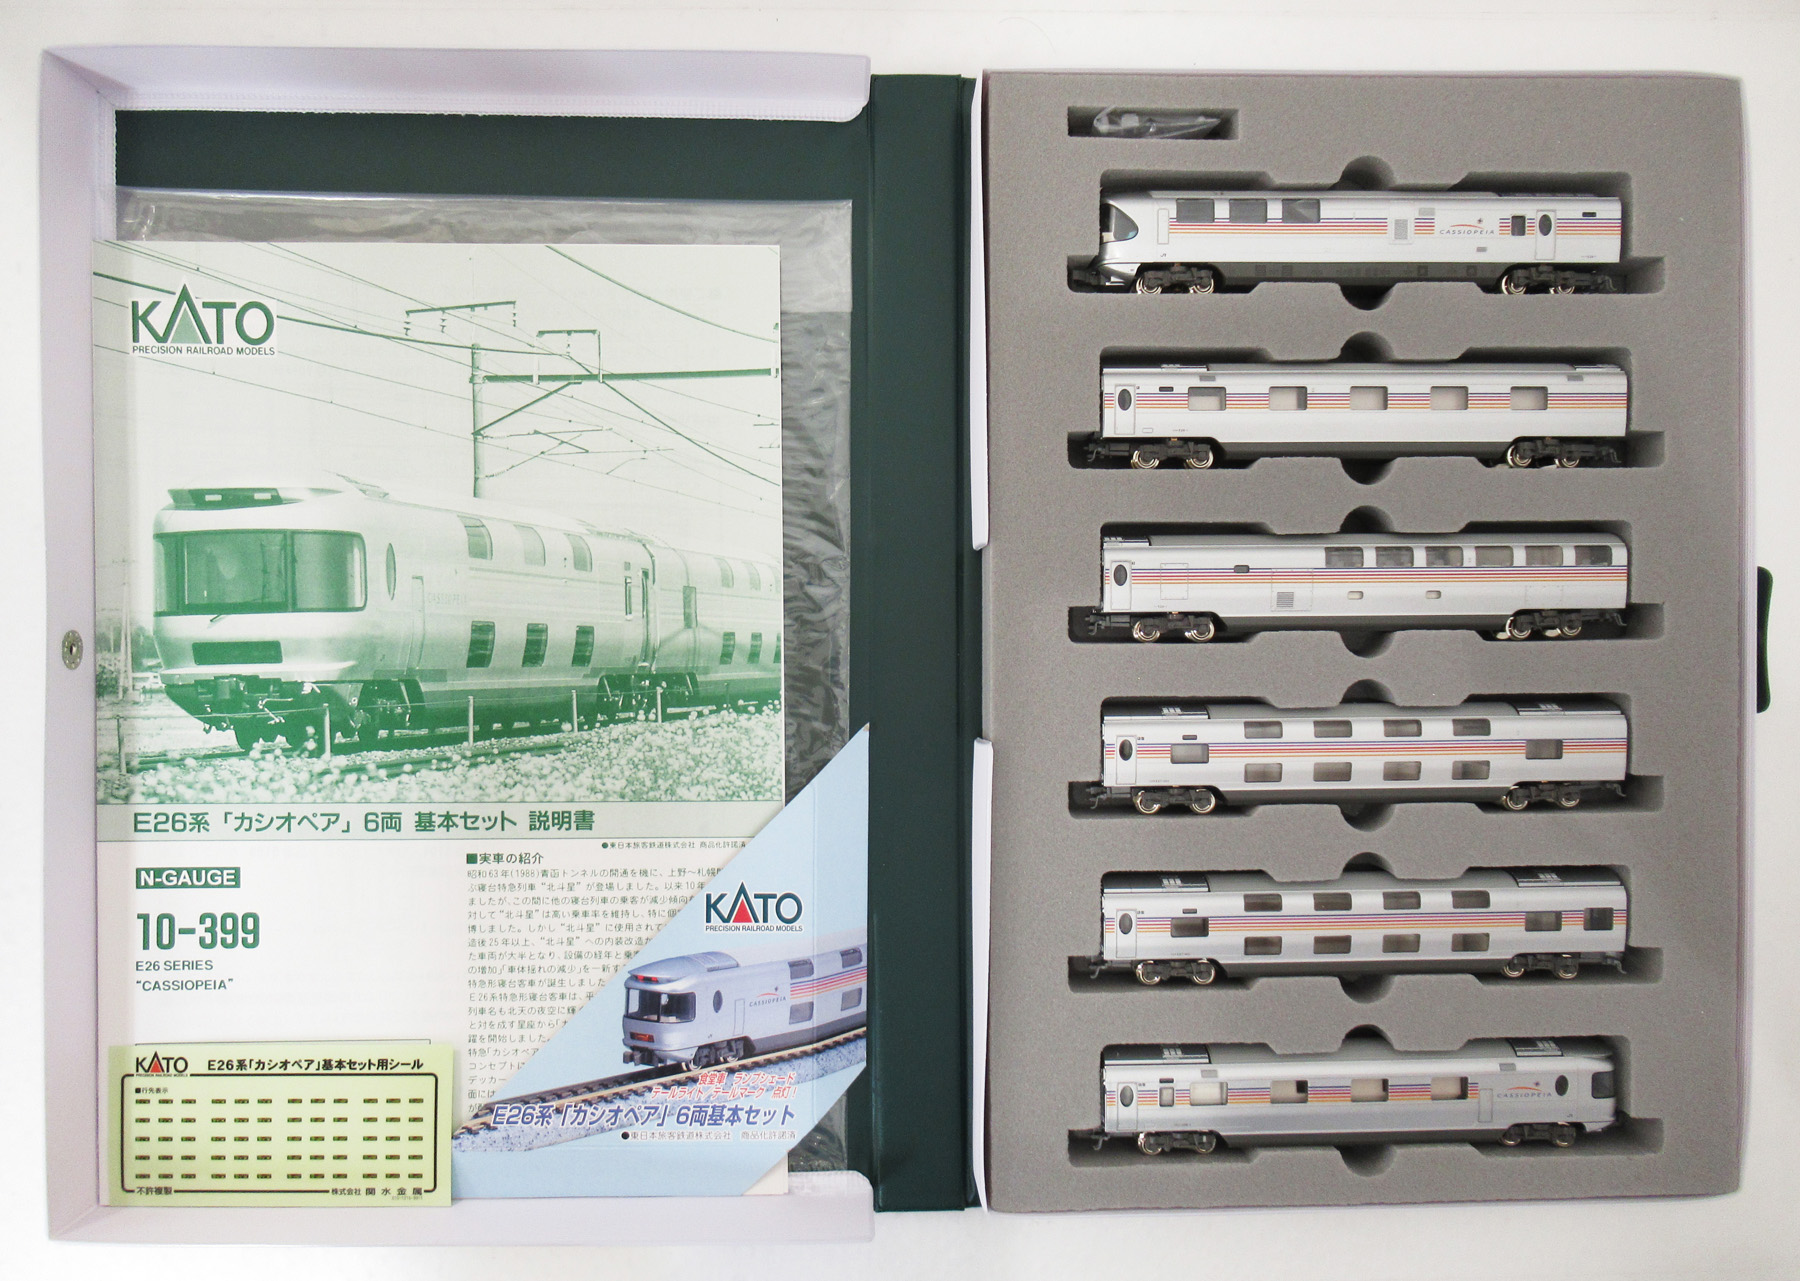 KATO 10-399 E26系 カシオペア 6両基本セット - 鉄道模型